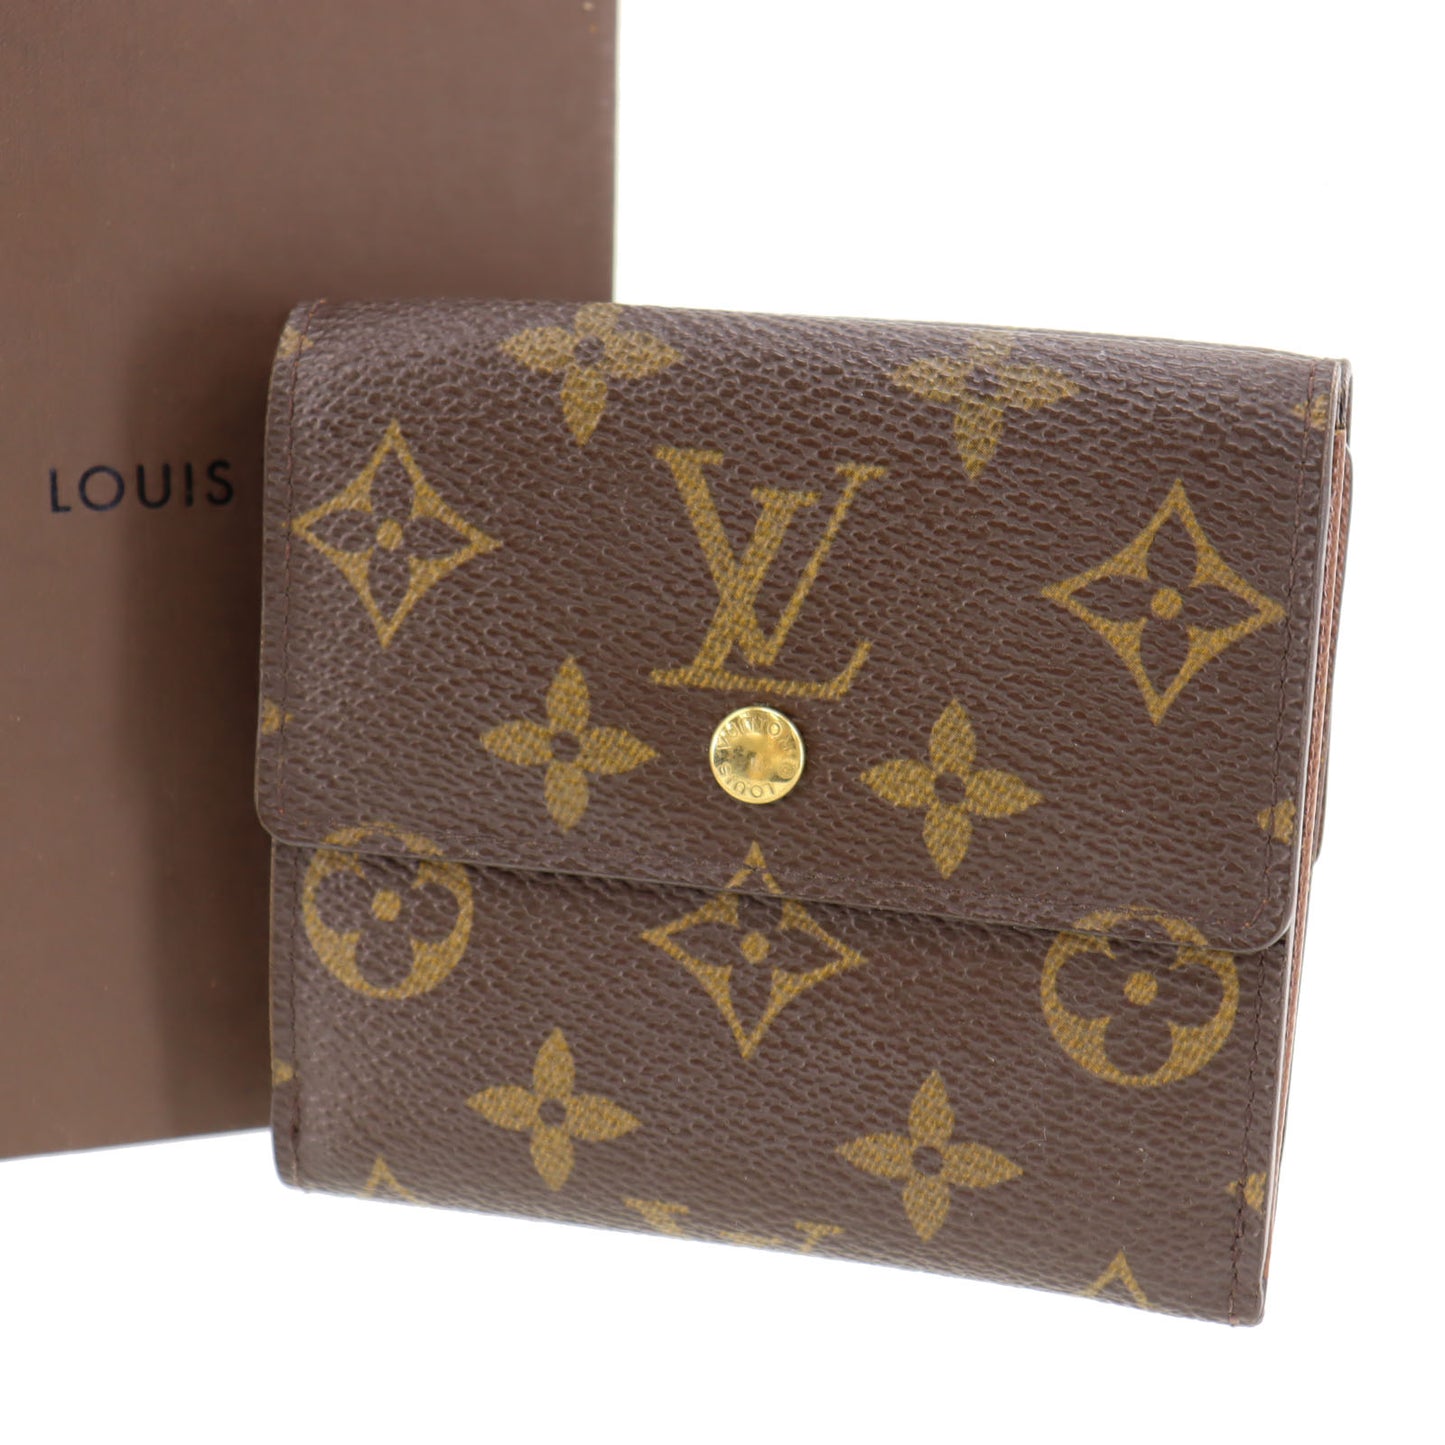 Preloved Louis Vuitton Monogram Portefeiulle Elise Trifold Wallet